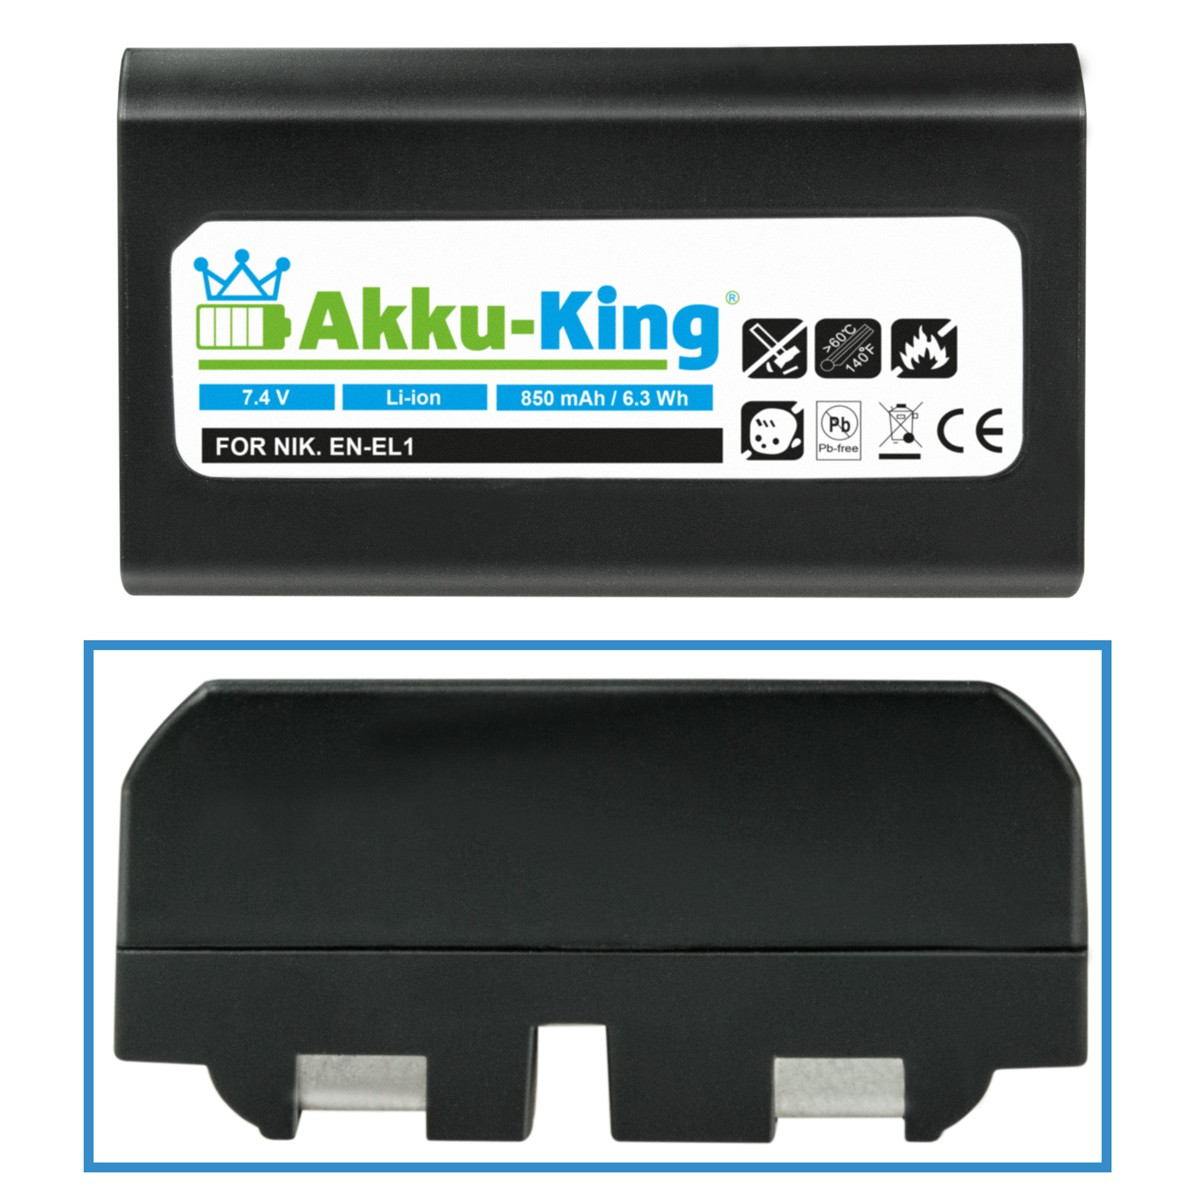 mit kompatibel EN-EL1 7.4 AKKU-KING Li-Ion 850mAh Kamera-Akku, Akku Volt, Nikon